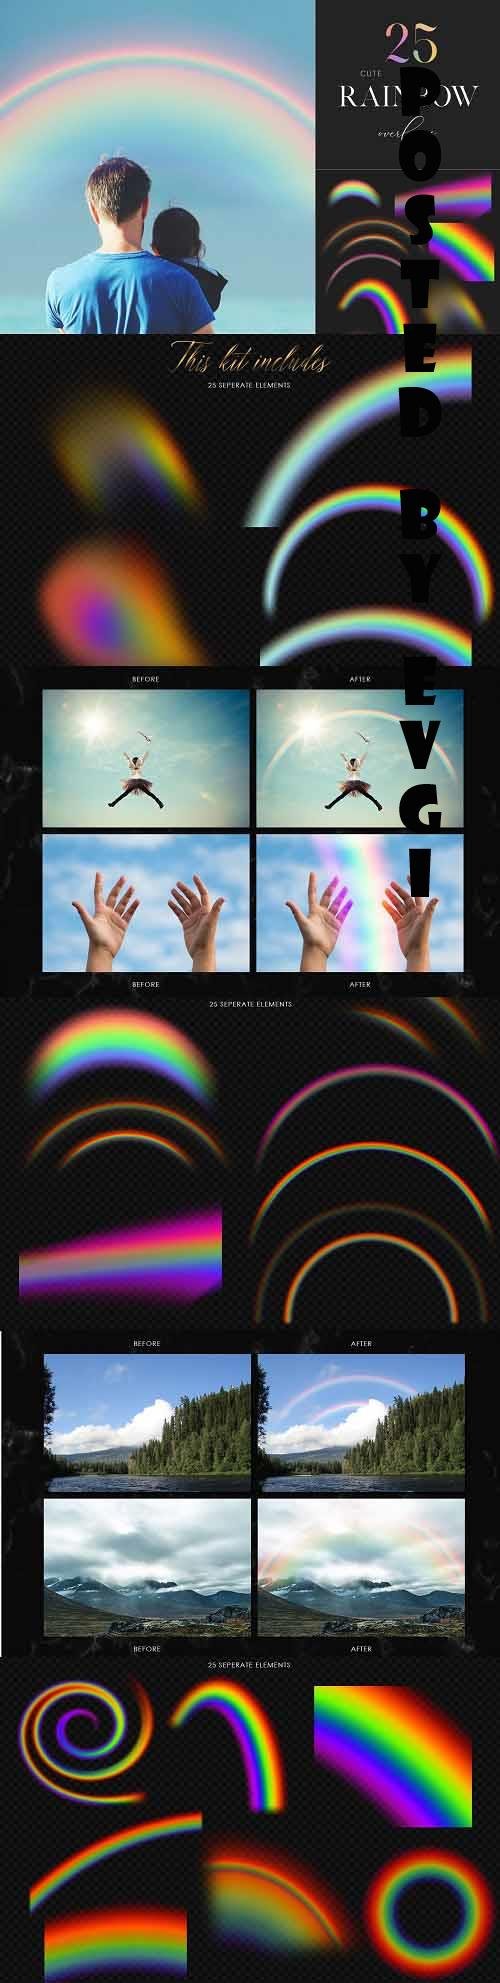 25 Realistic Rainbow Overlays, Rainbow Photo Effects - 1893769